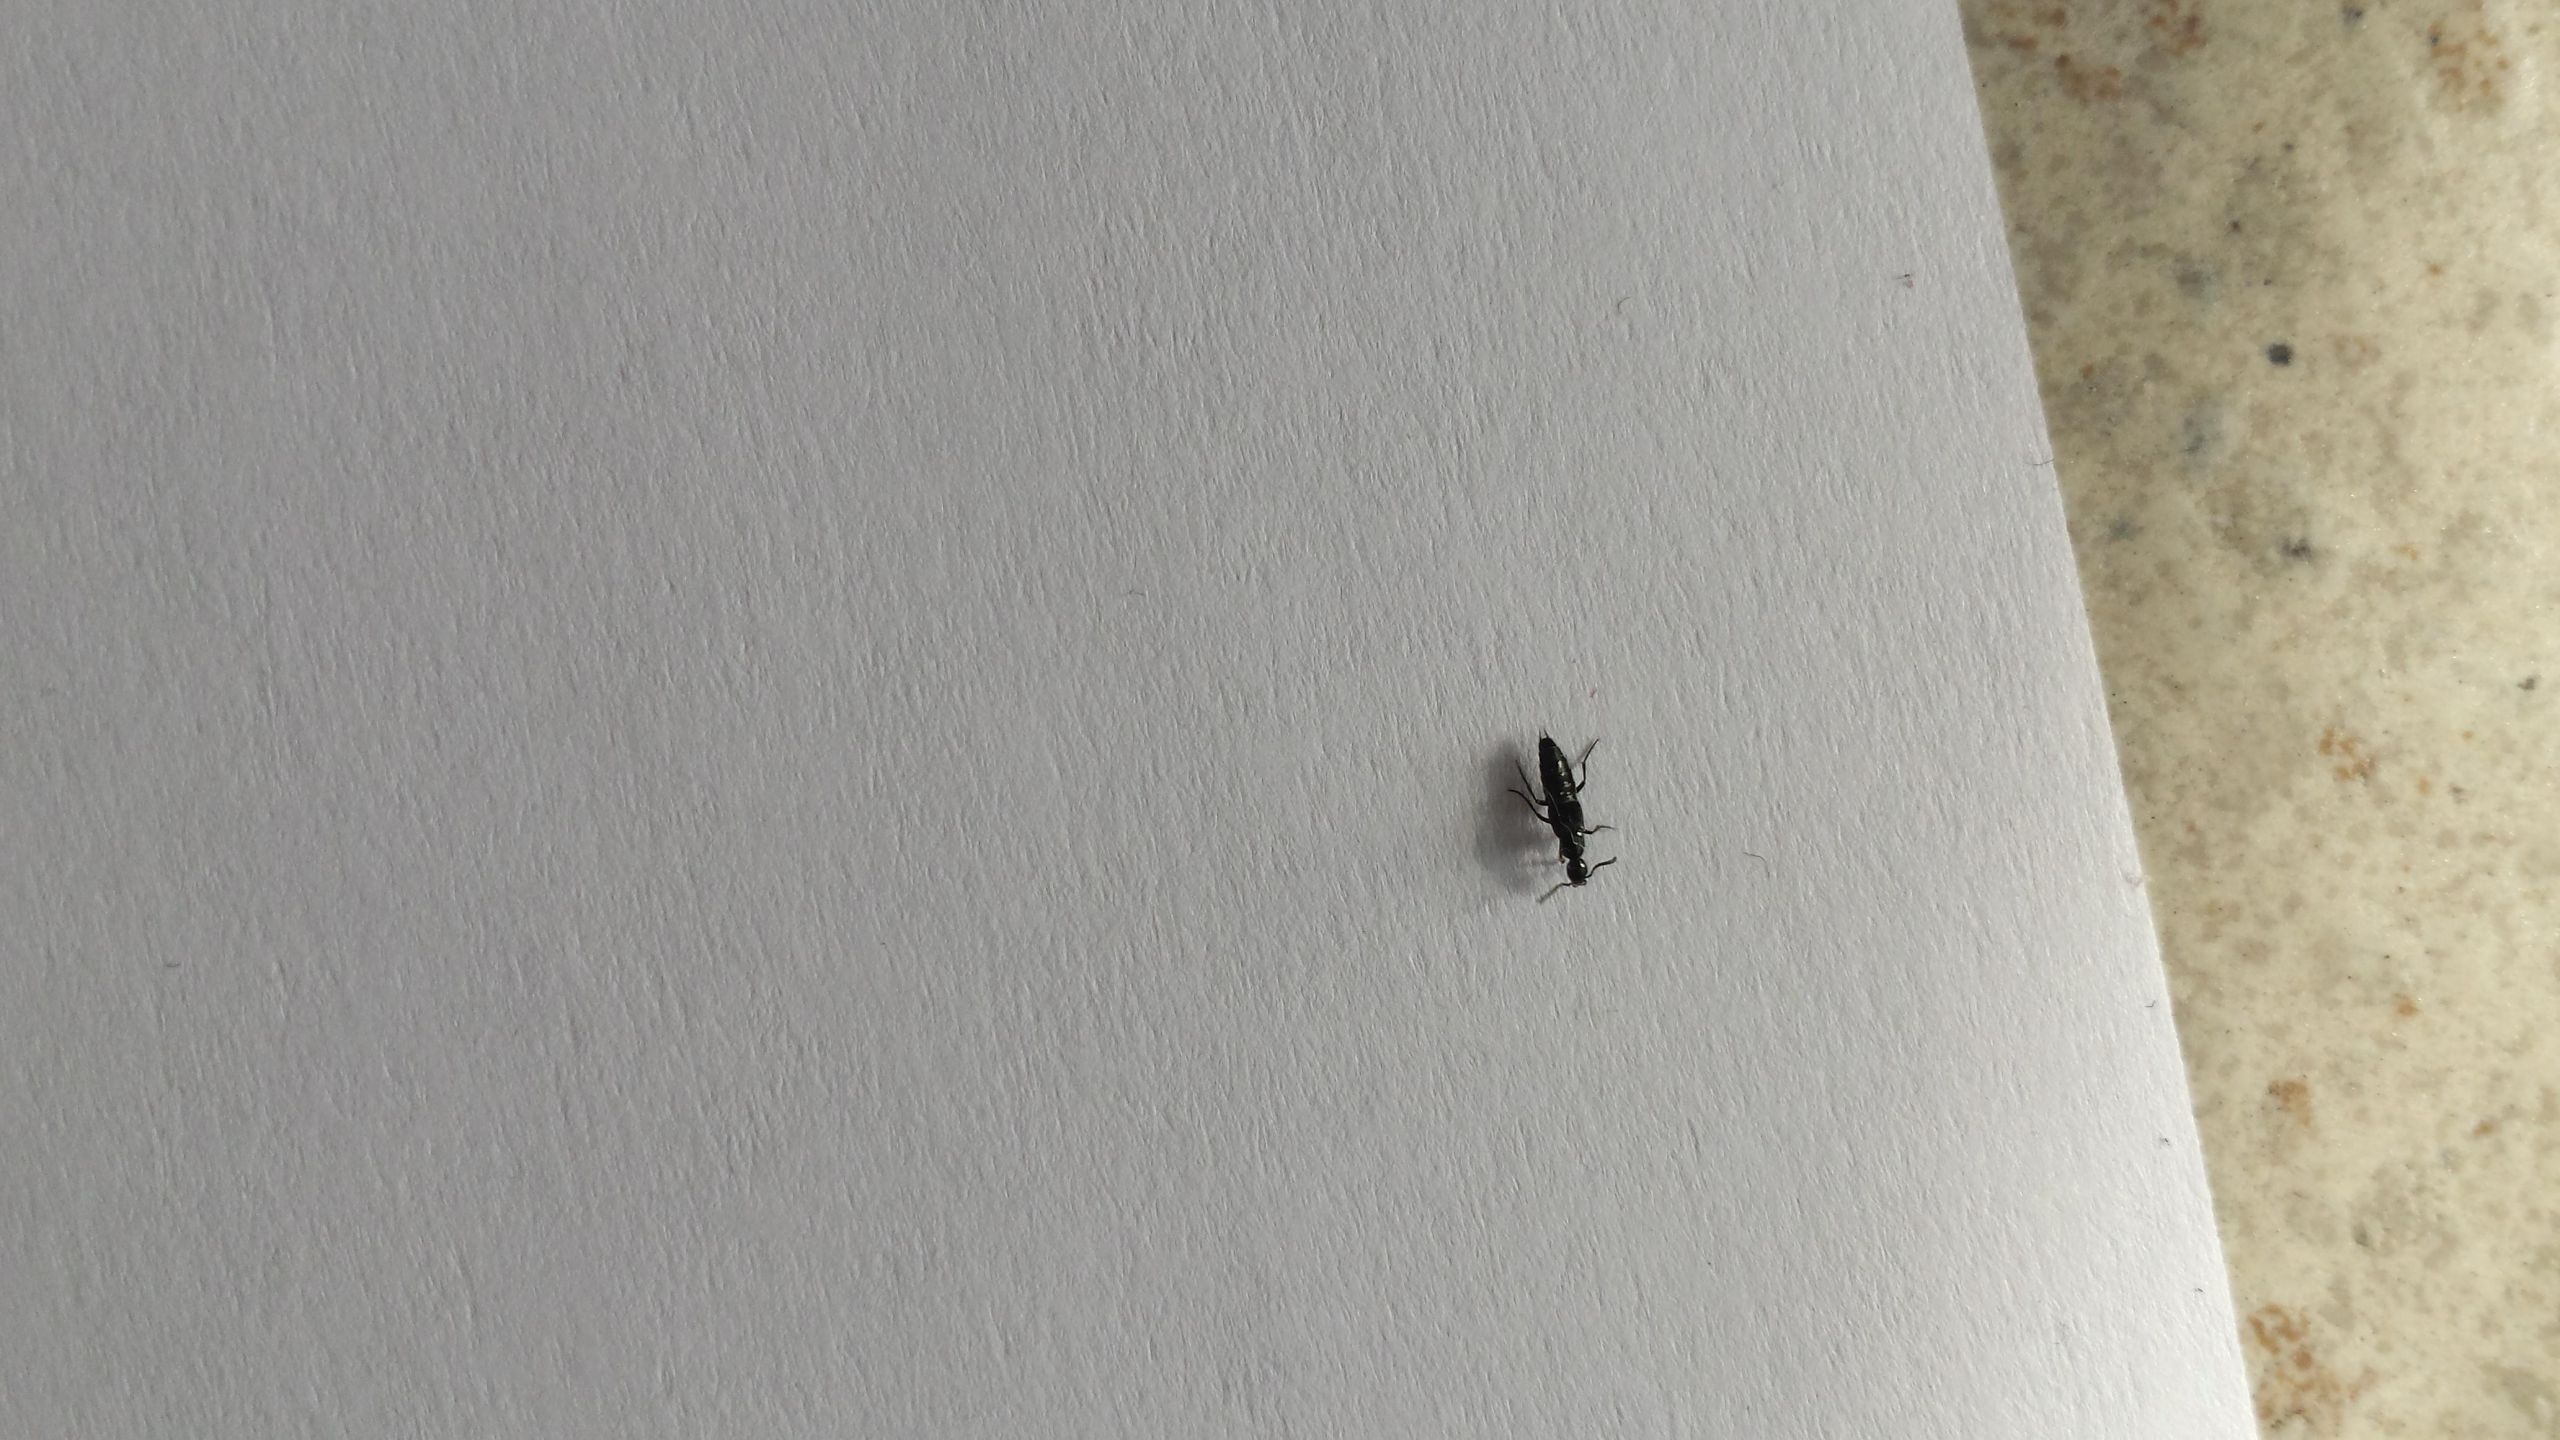 Small Black Bugs In Bathroom
 [Northern Italy] Found in my bathroom pletely black